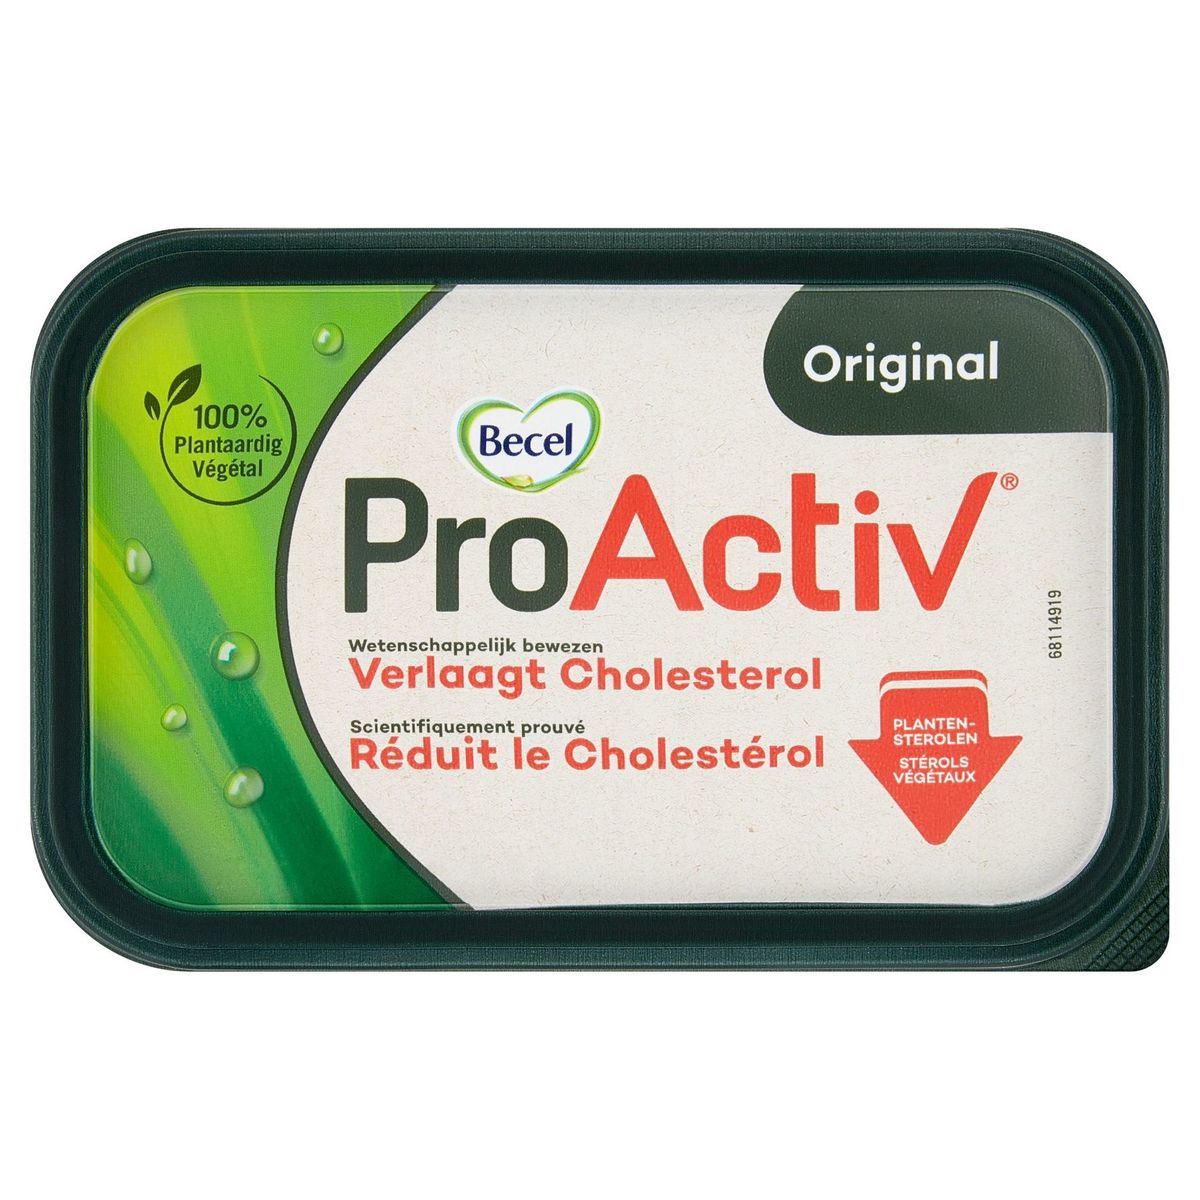 ProActiv | Verlaagt cholesterol | 475g